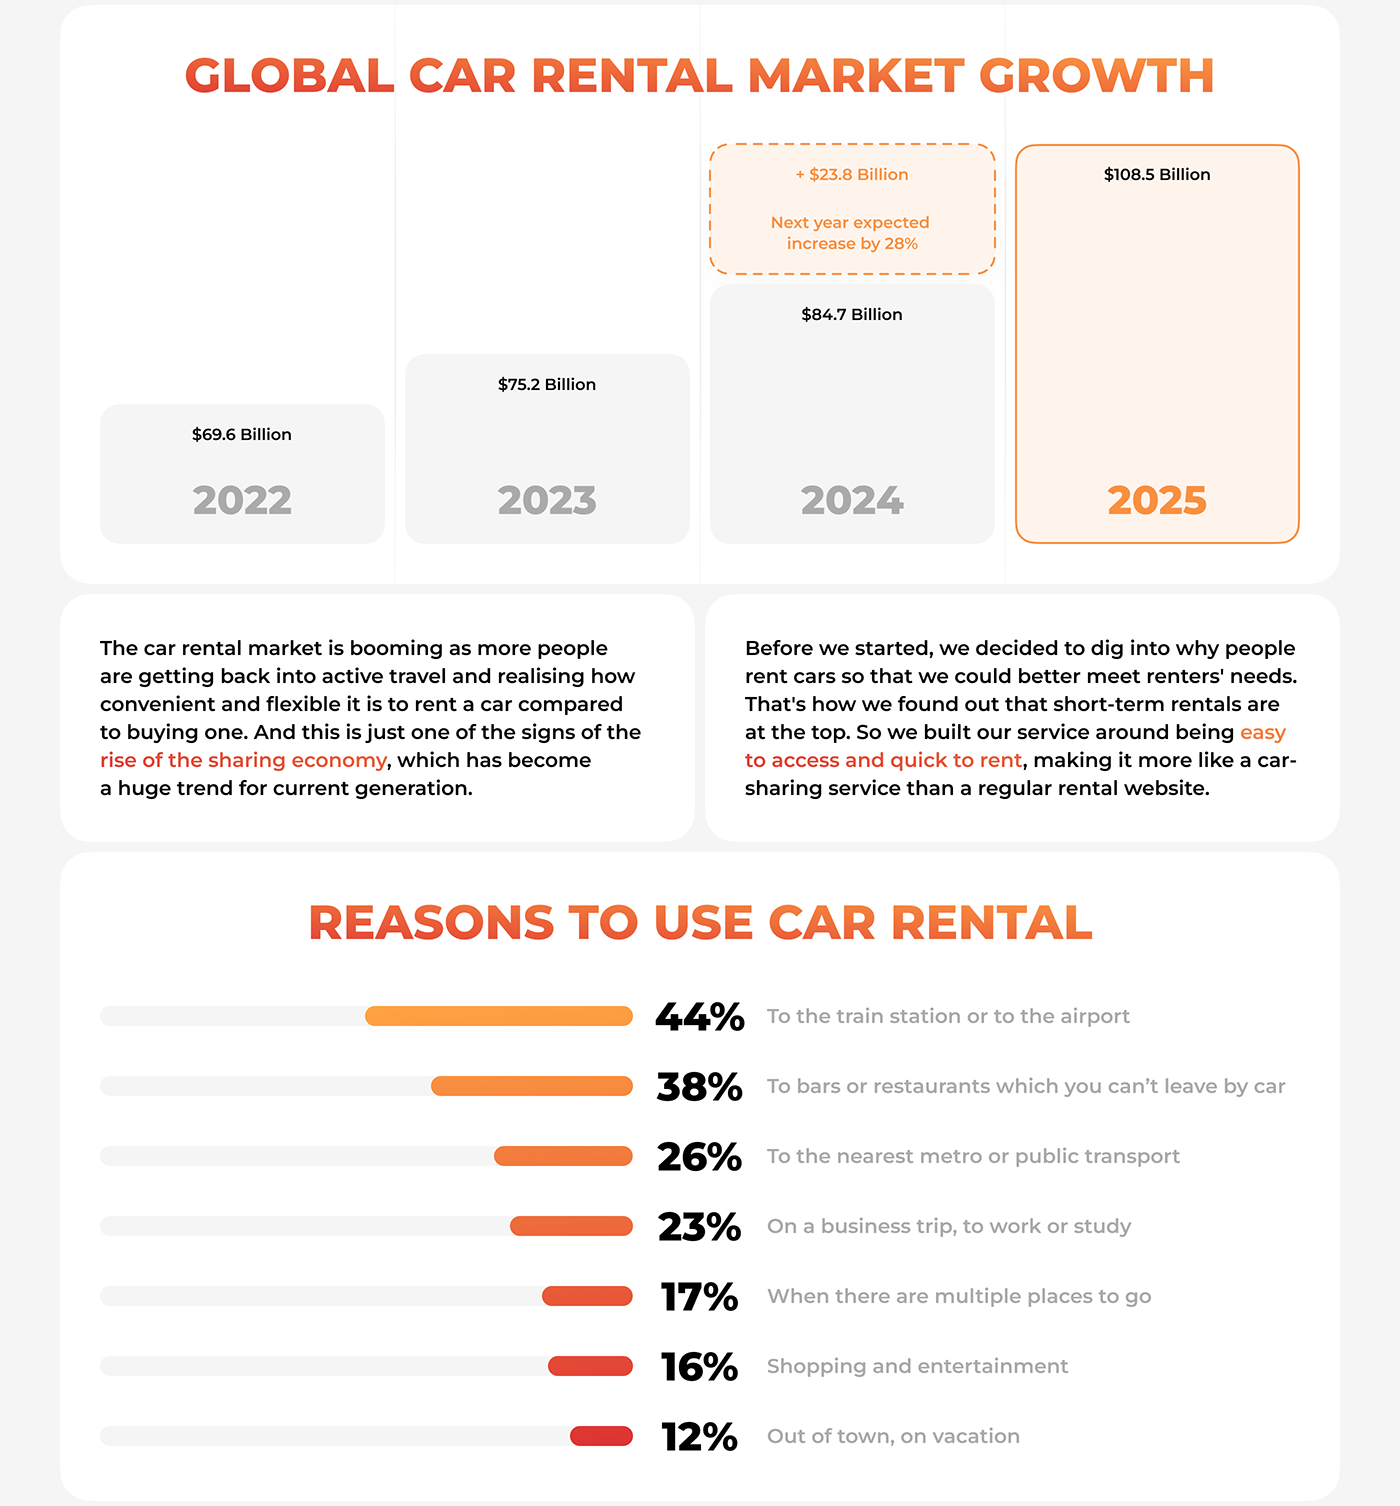 carrental redesign Web Design  Service design user interface UI/UX car Carsharing rent a car sharing economy